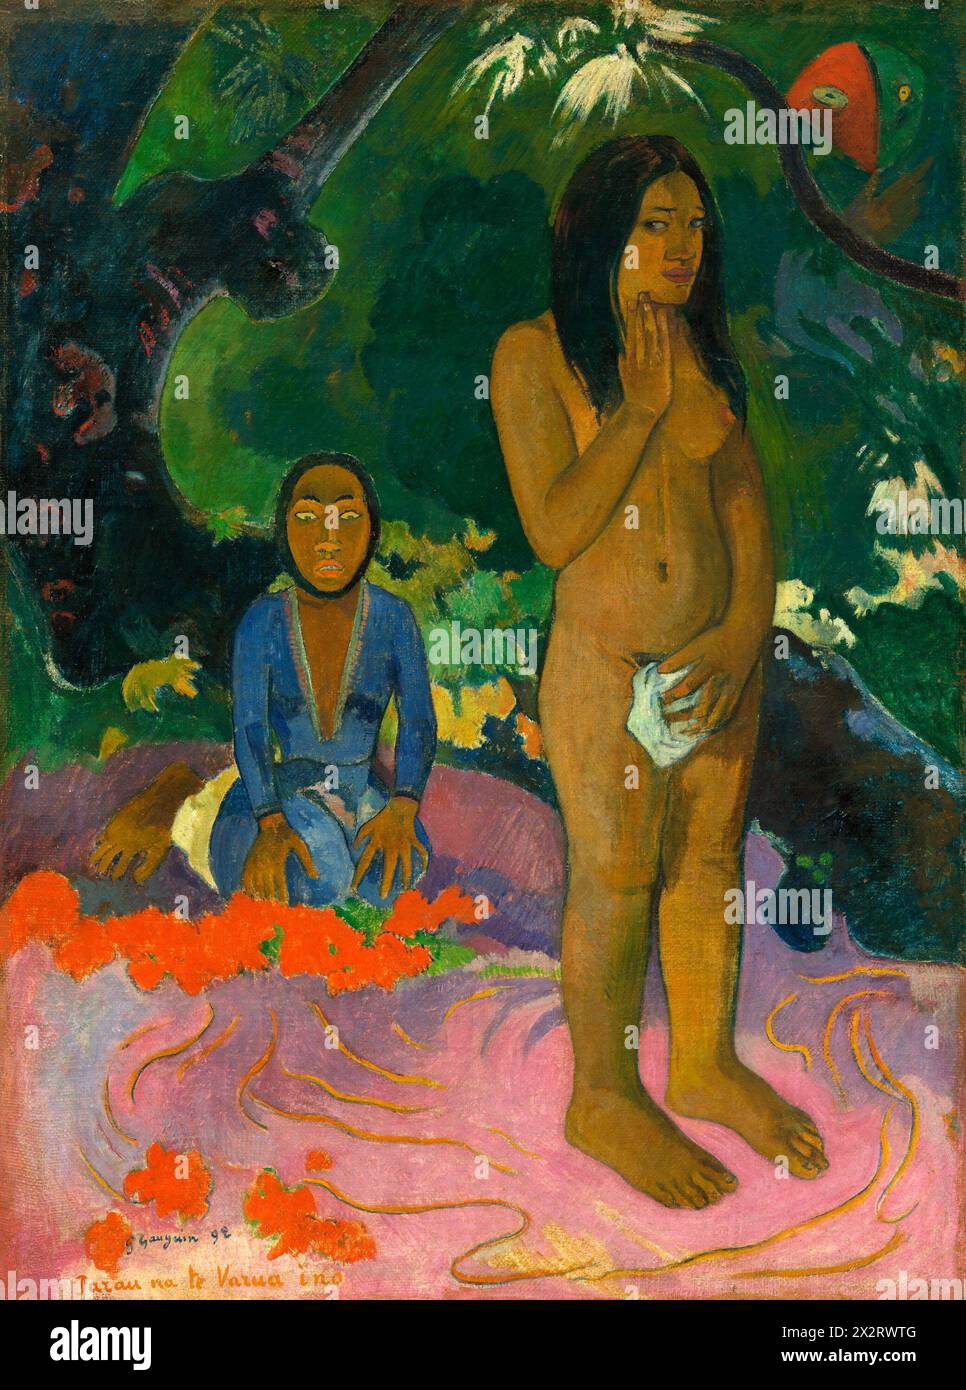 Paul Gauguin. Parau na te Varua ino or Words of the Devil. 1892. Stock Photo